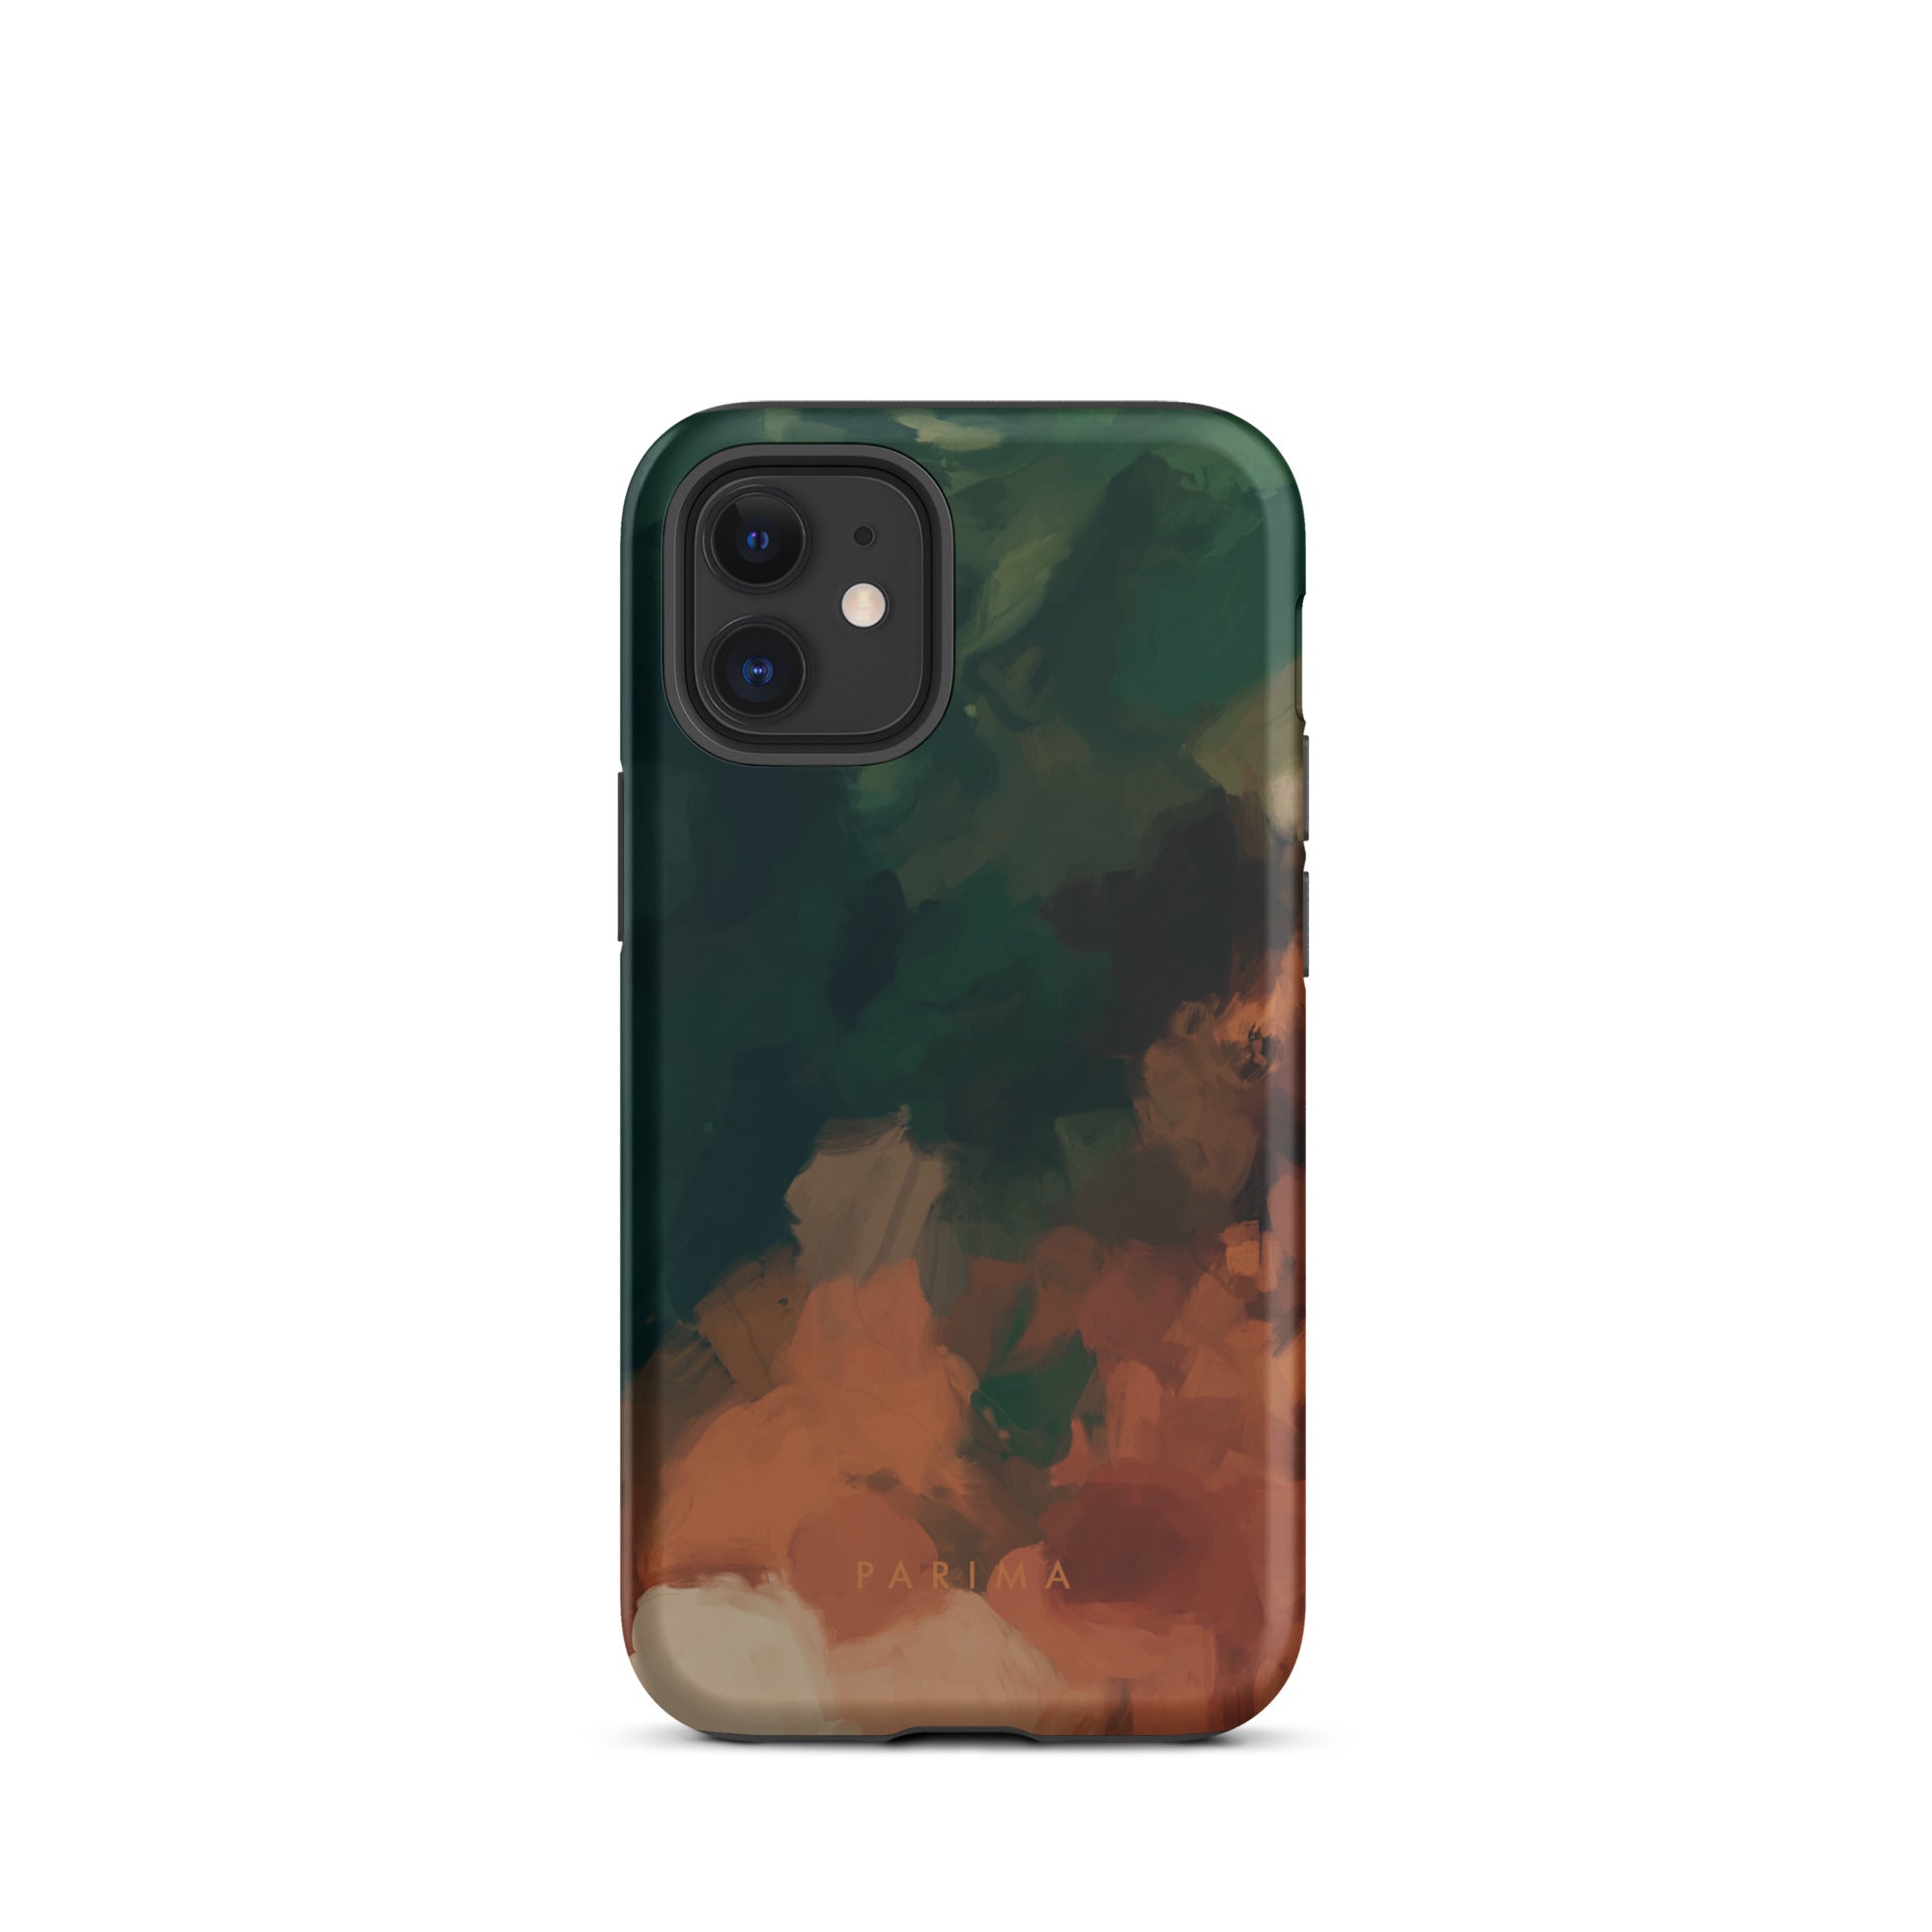 Cedar, green and brown abstract art - iPhone 12 mini tough case by Parima Studio